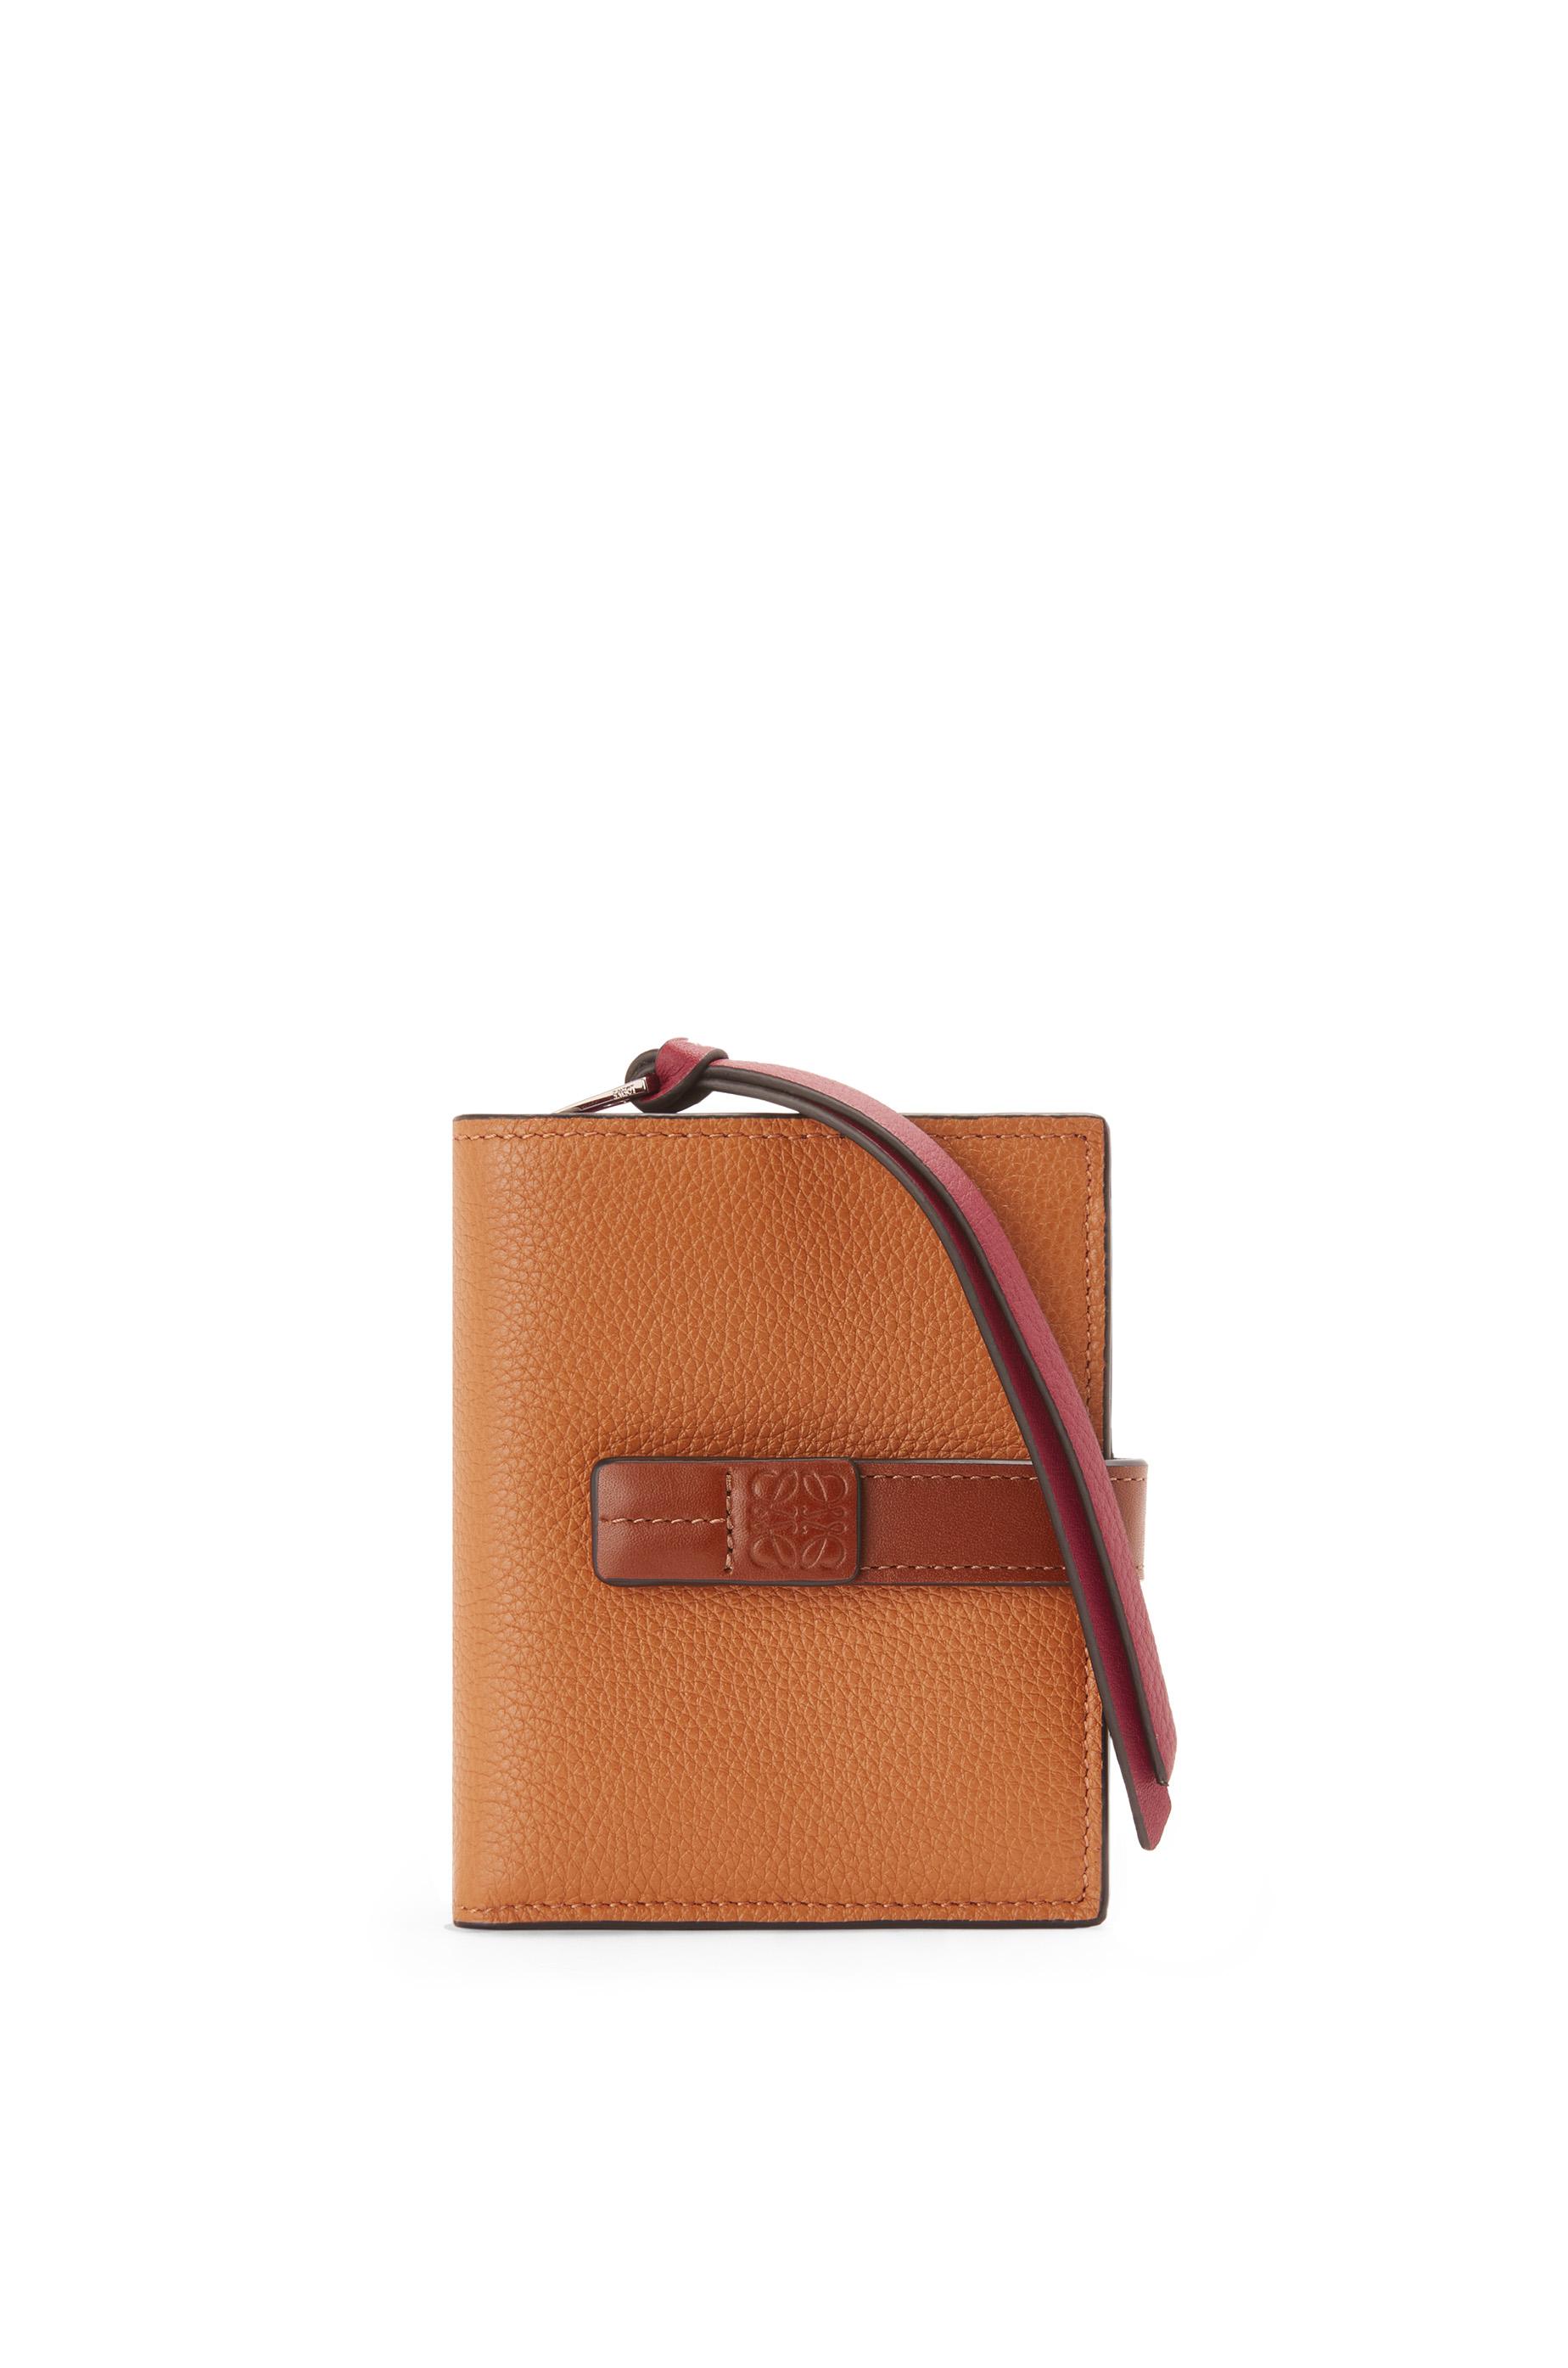 Compact zip wallet in soft grained calfskin by LOEWE